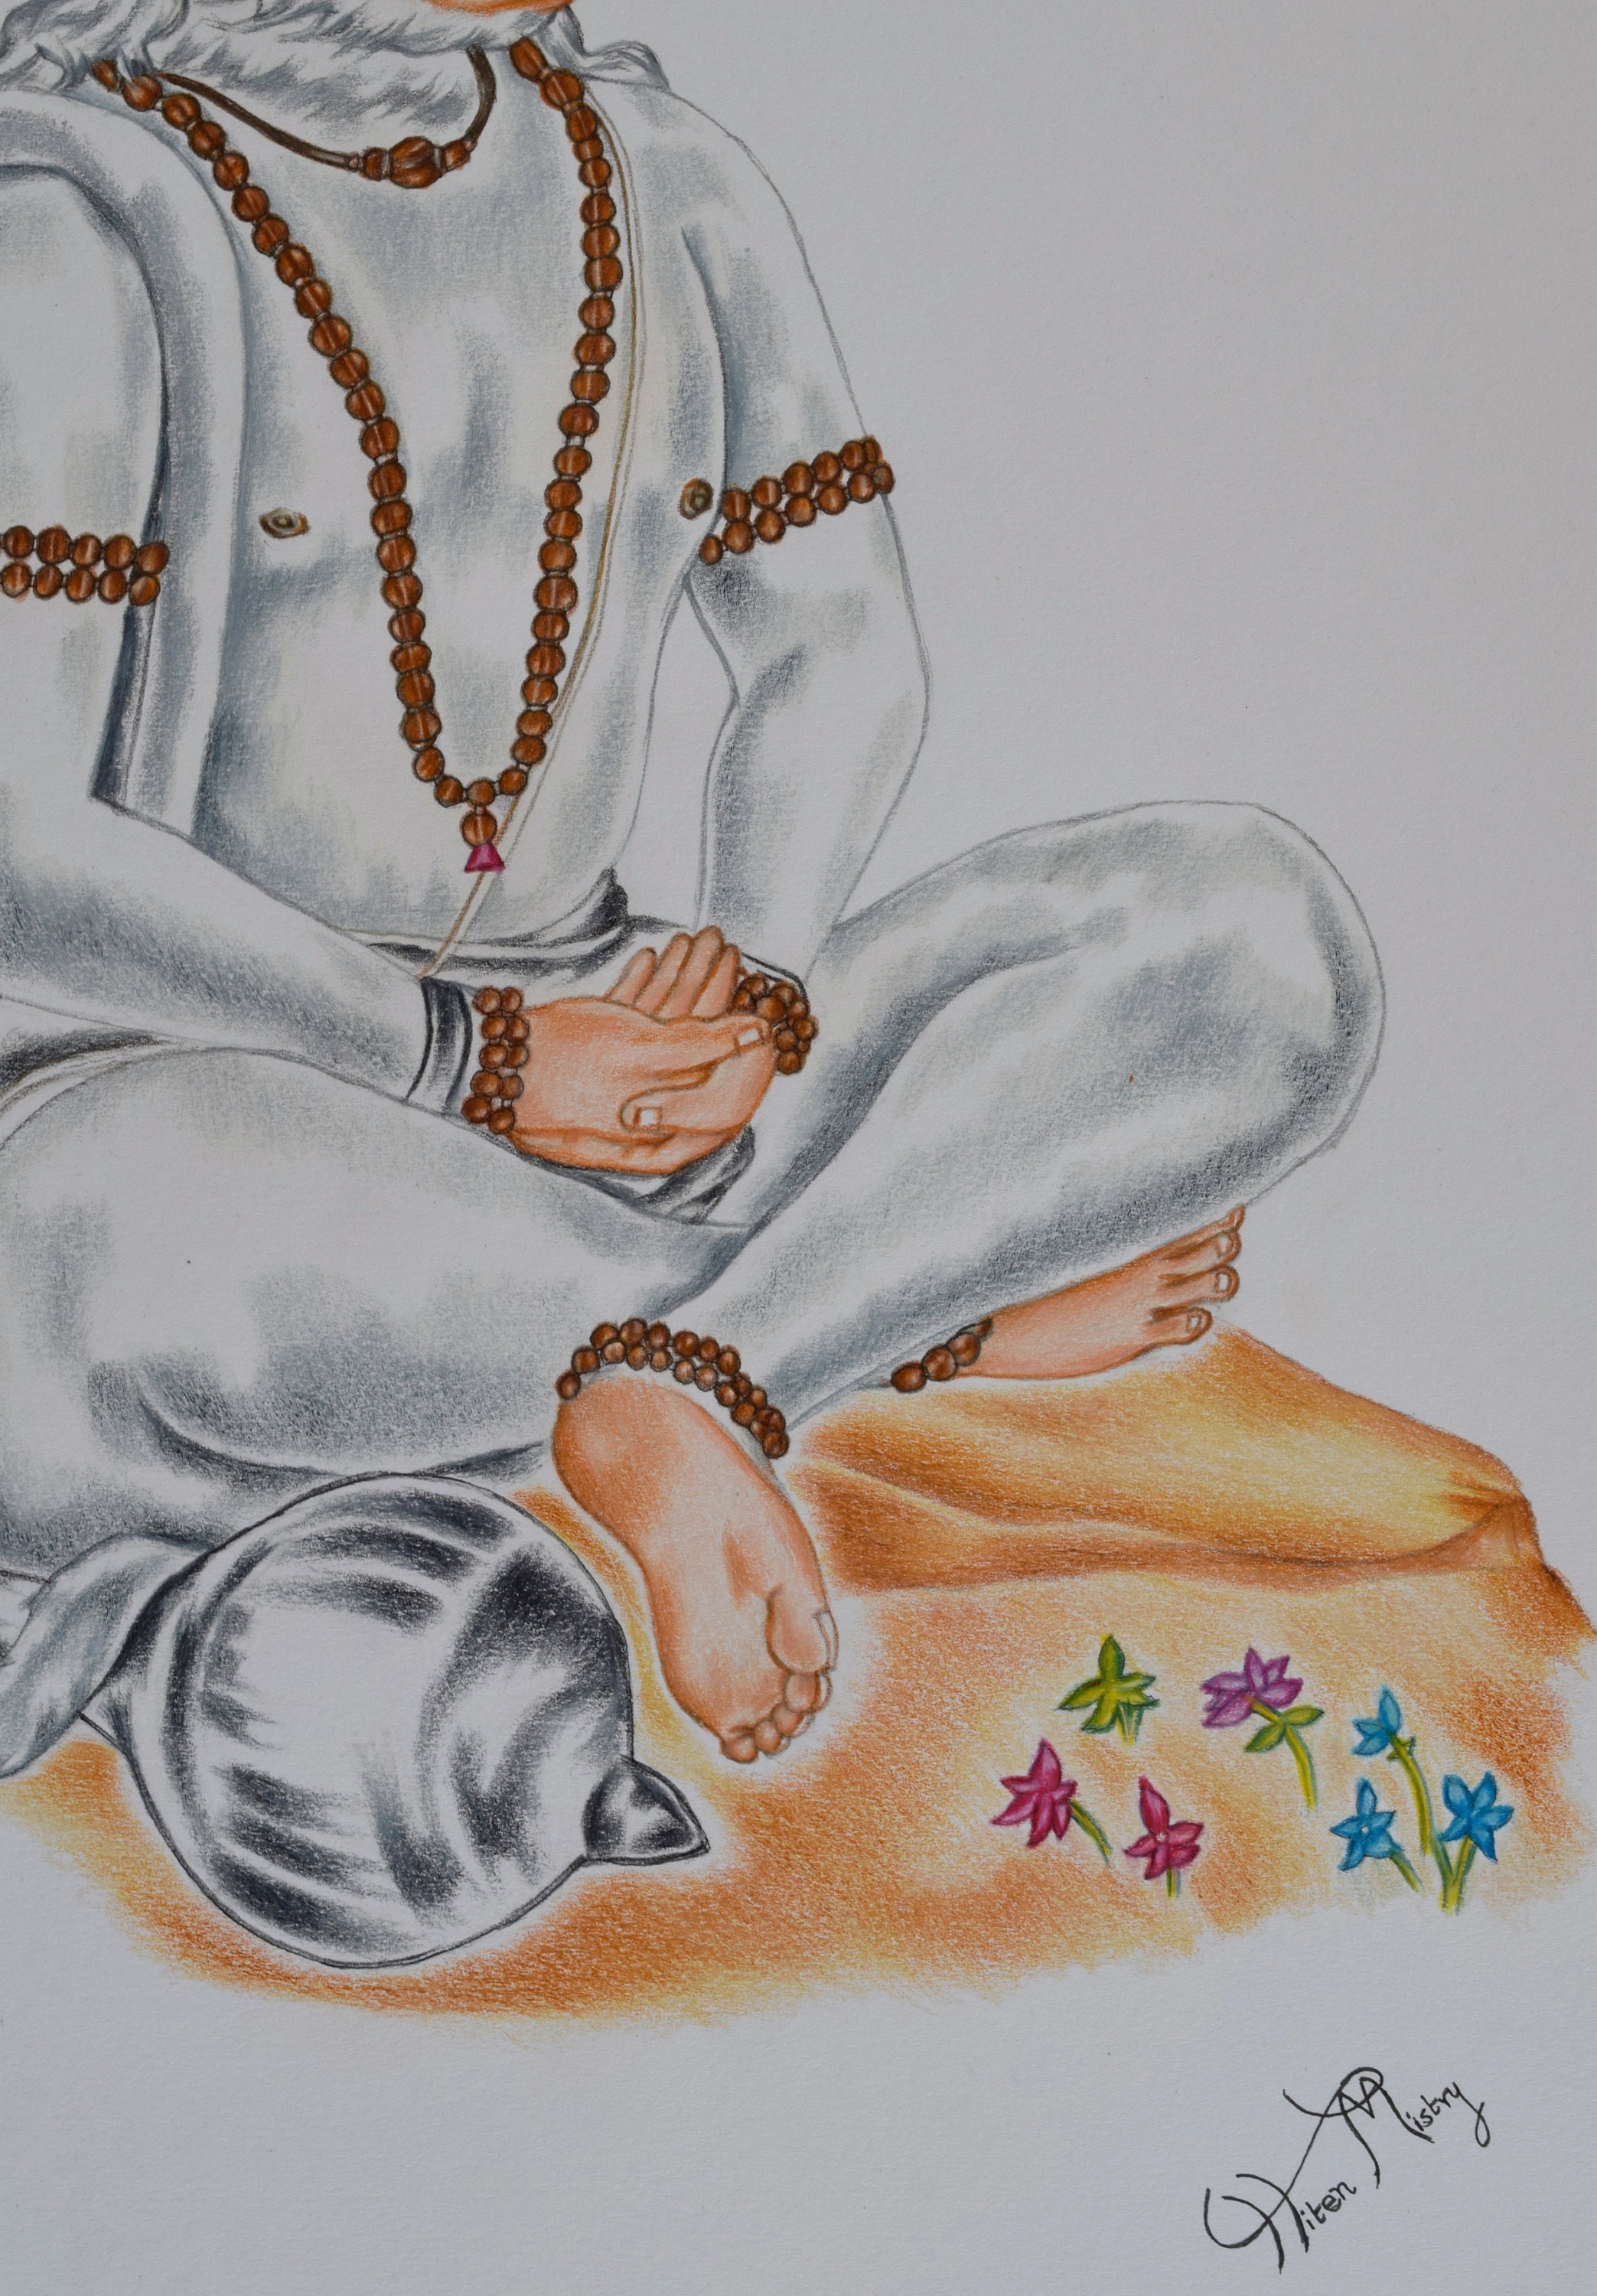 Pencil Sketch of Lord Hanuman | Art drawings, Pencil art drawings, Drawings